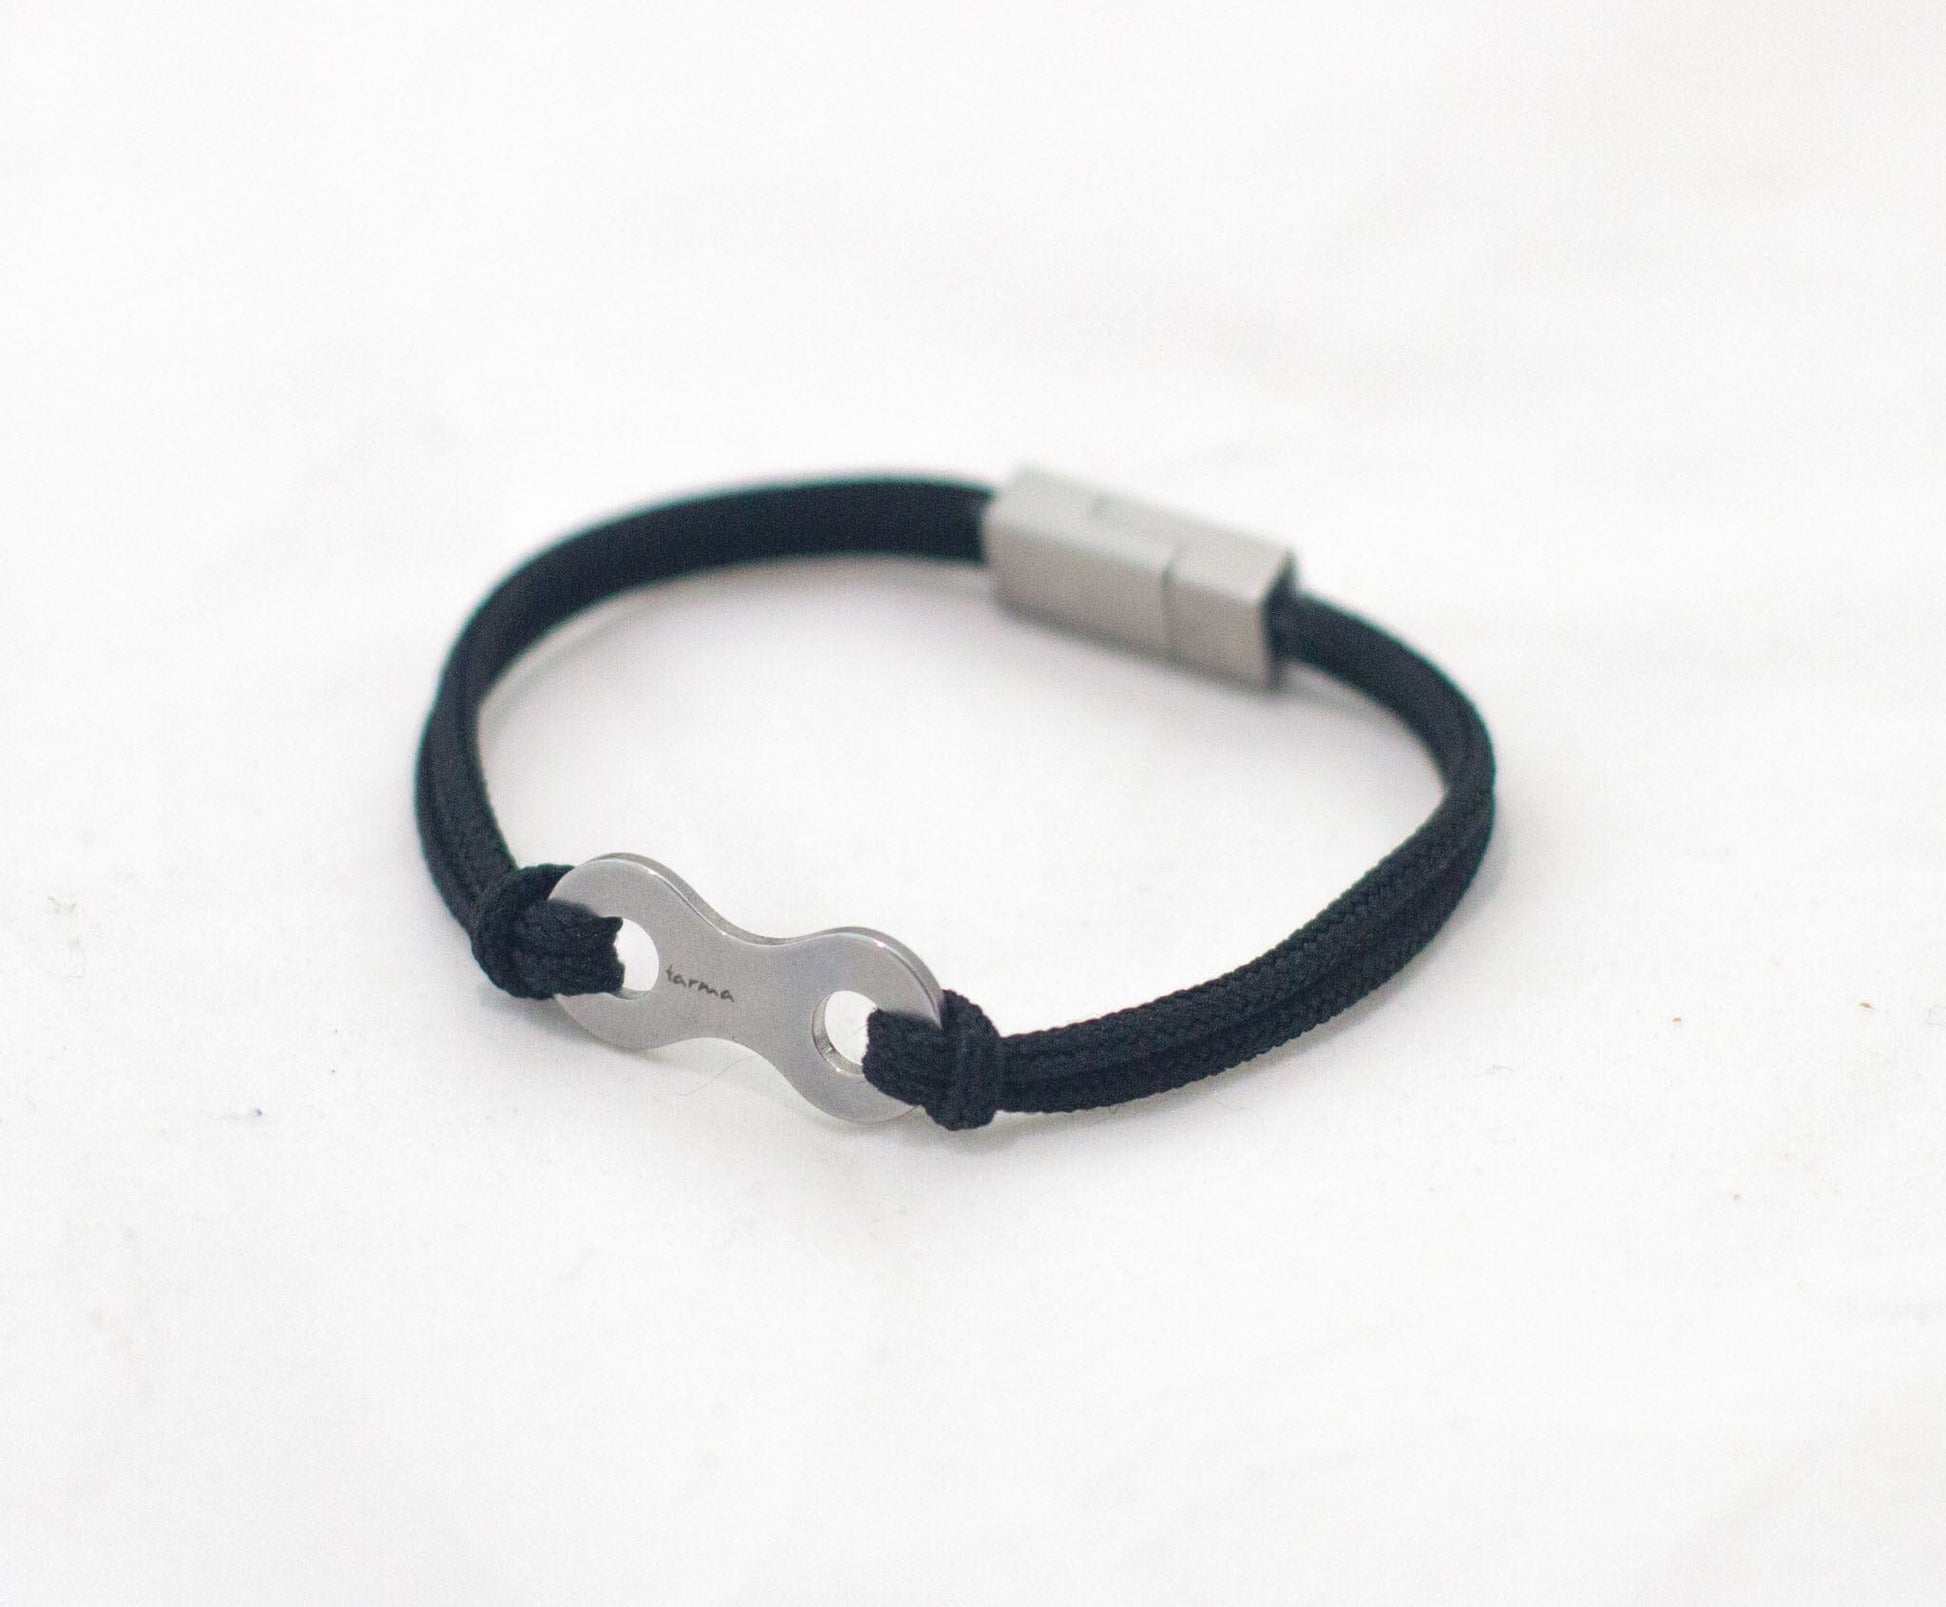 Stainless steel bike link bracelet